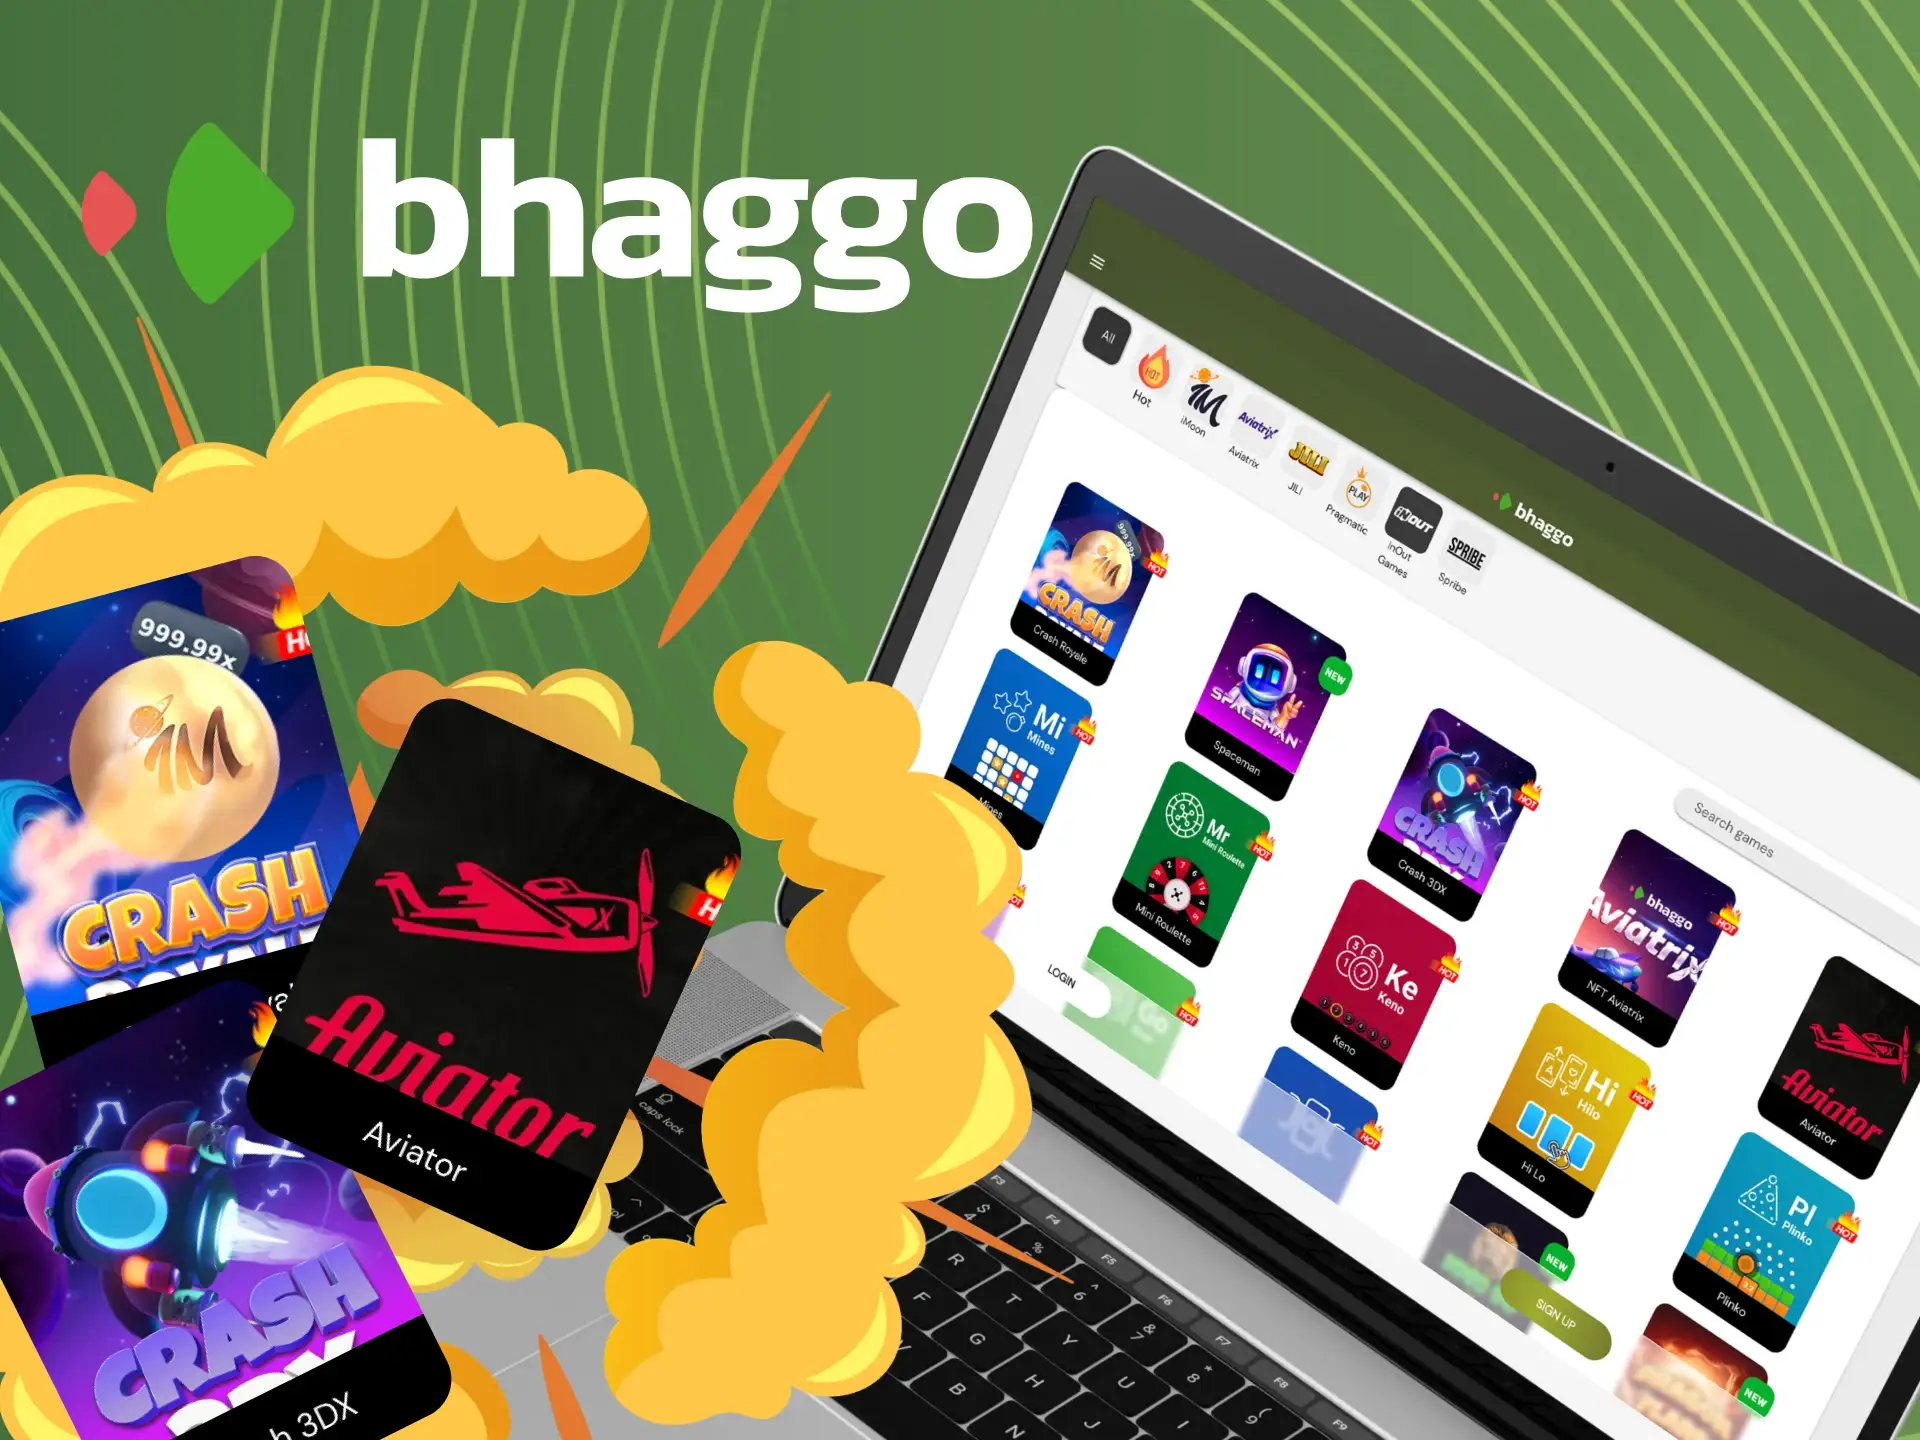 The most popular crash games at Bhaggo.